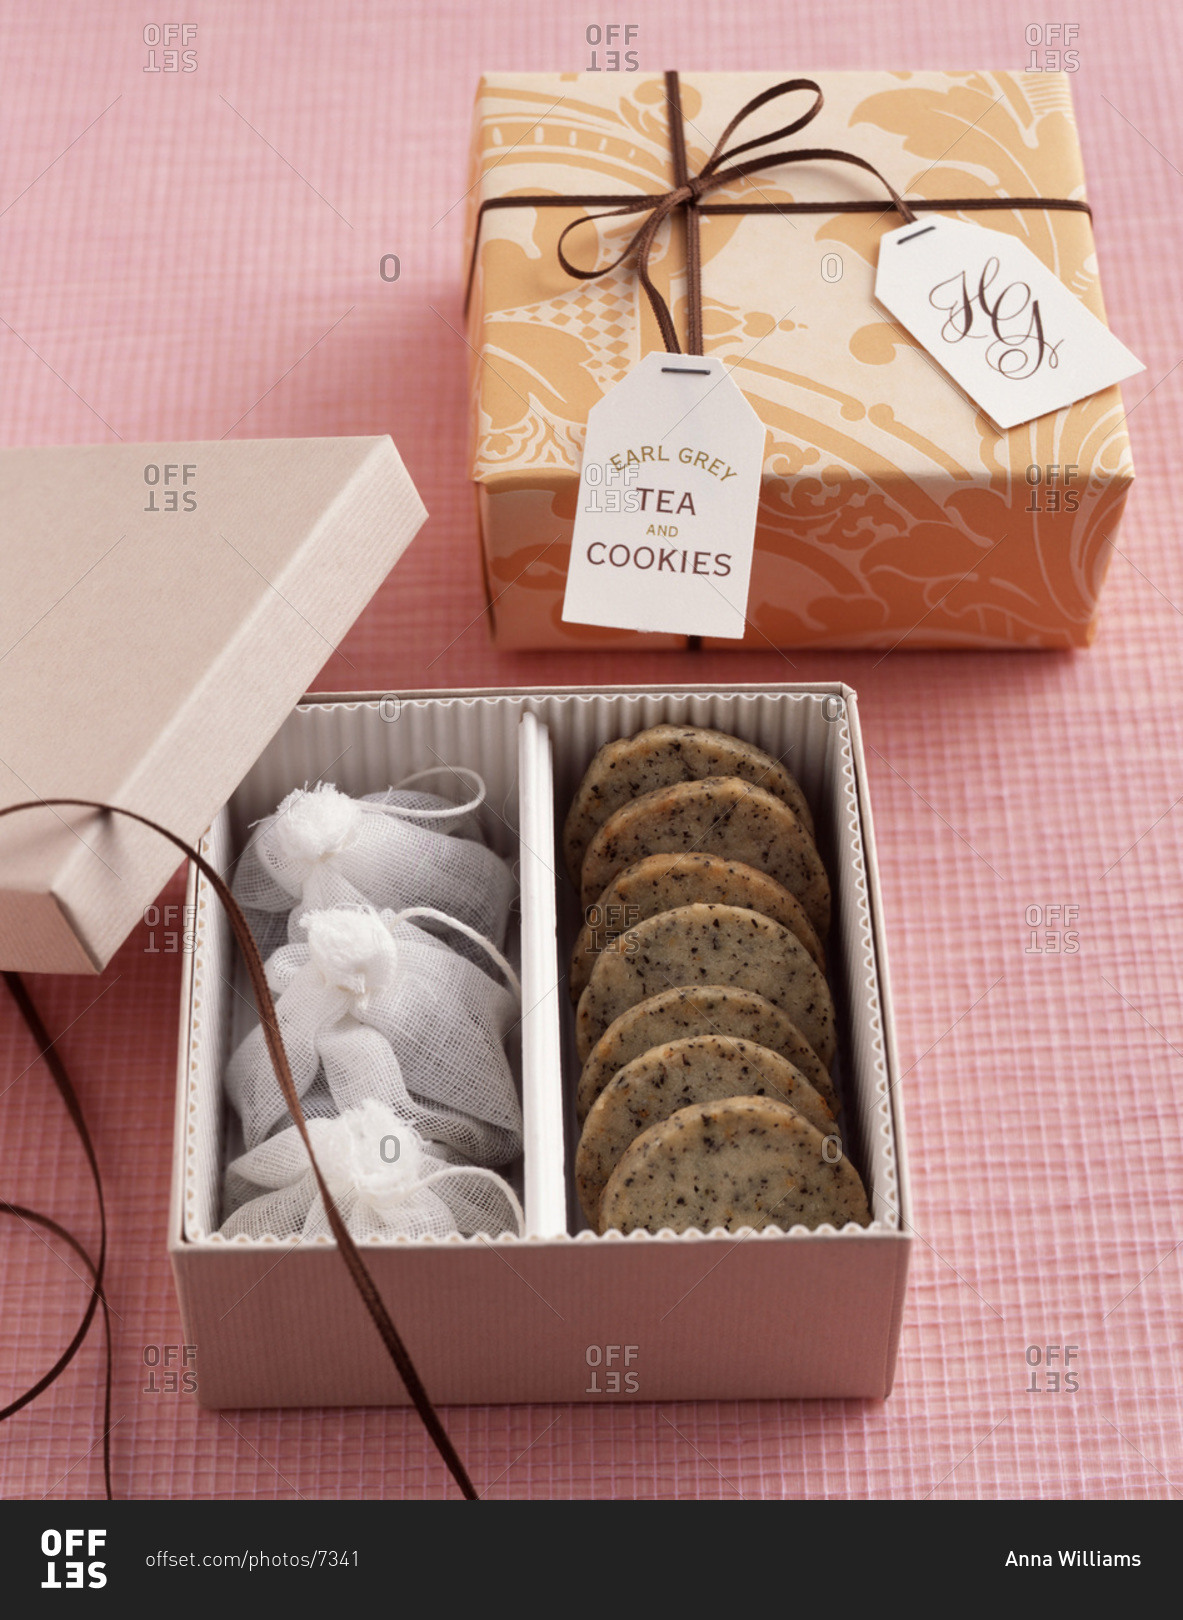 Earl grey tea and cookies in an elegant paper box.